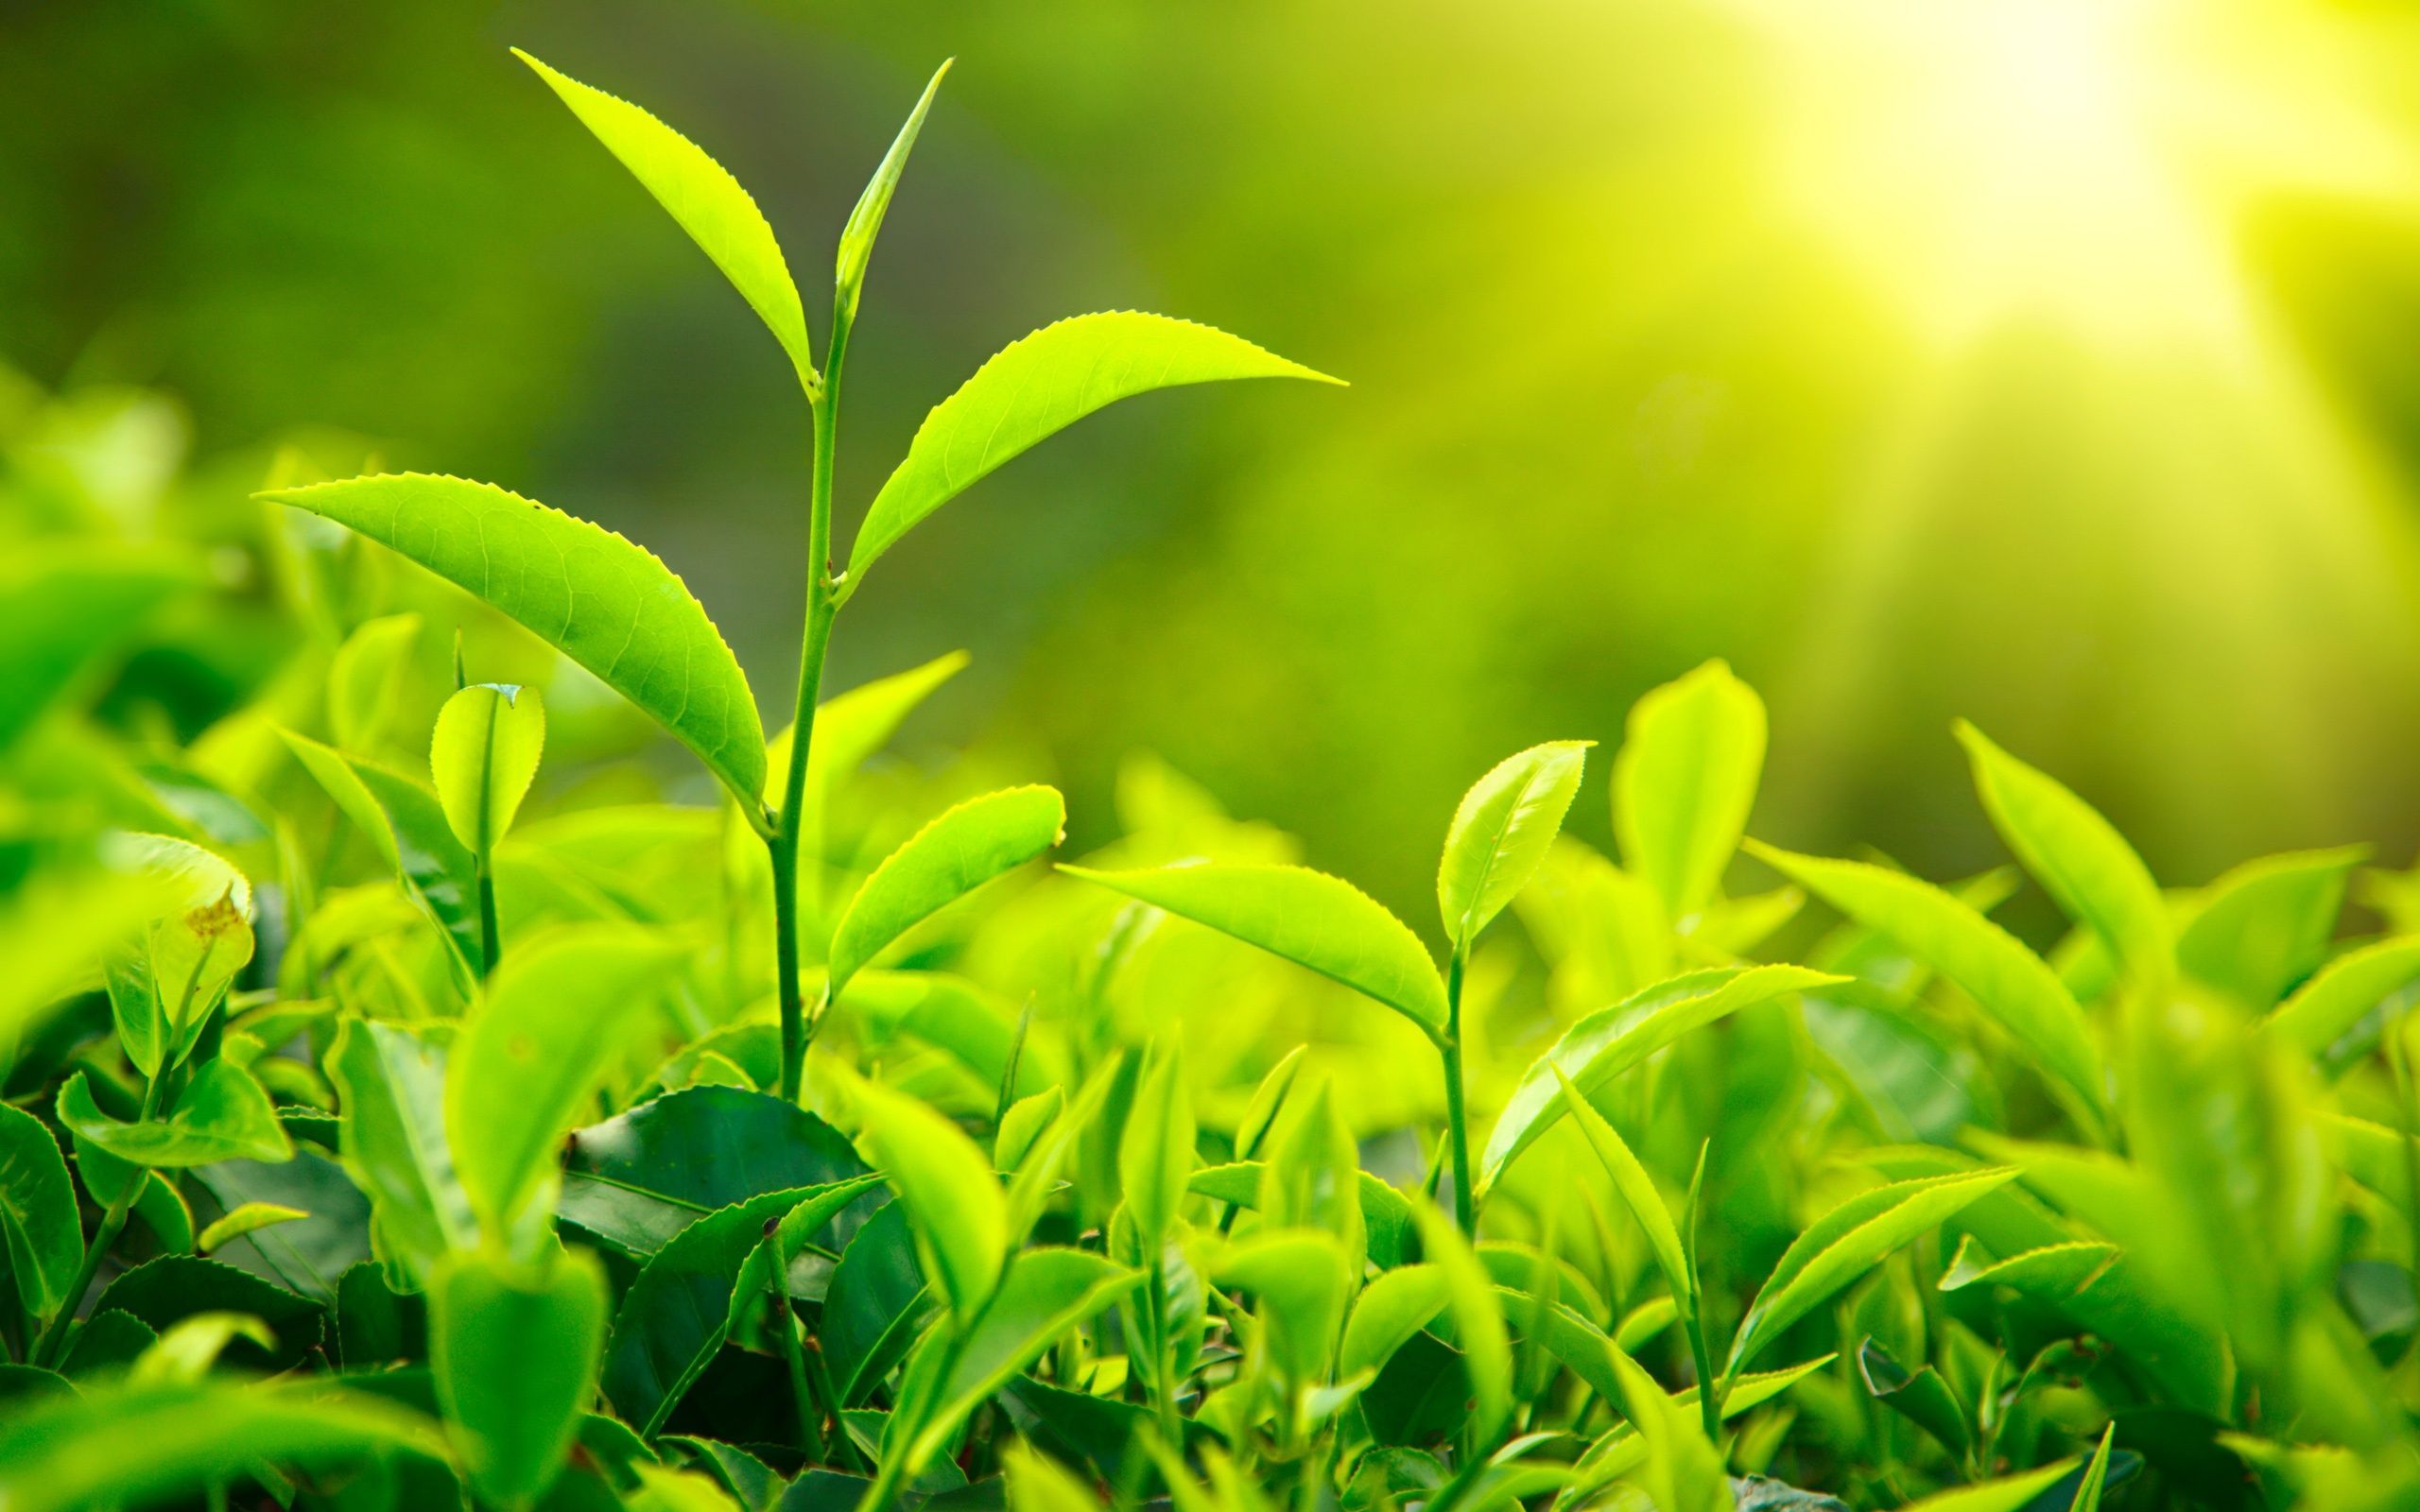 How to Grow Your Own Tea Garden